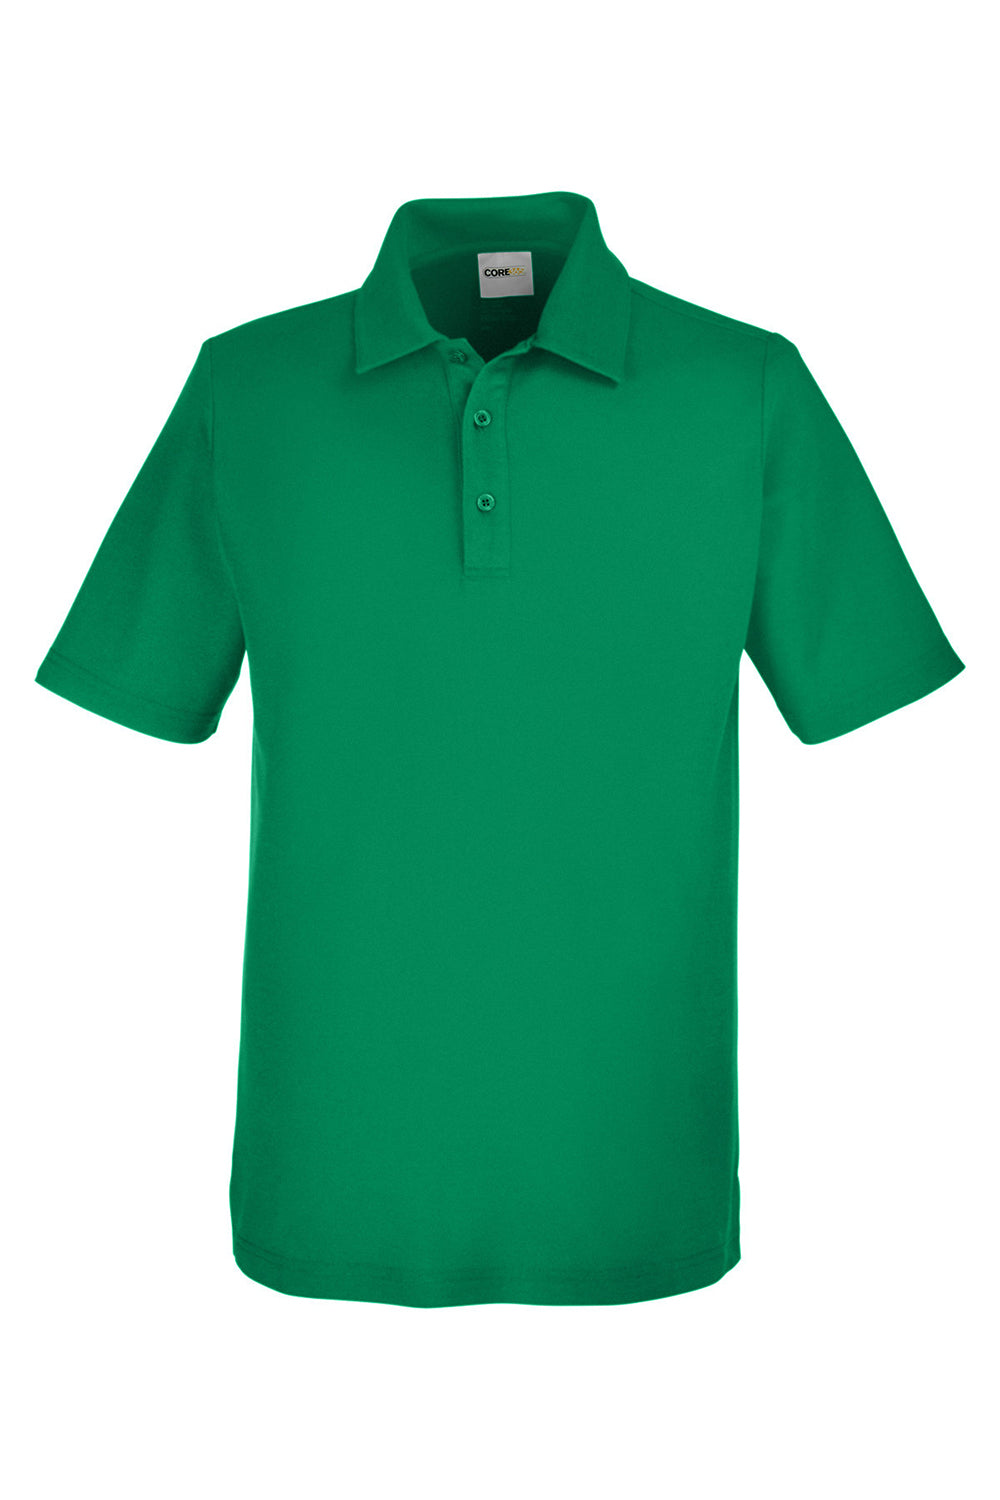 Core 365 CE112 Mens Fusion ChromaSoft Performance Moisture Wicking Short Sleeve Polo Shirt Kelly Green Flat Front